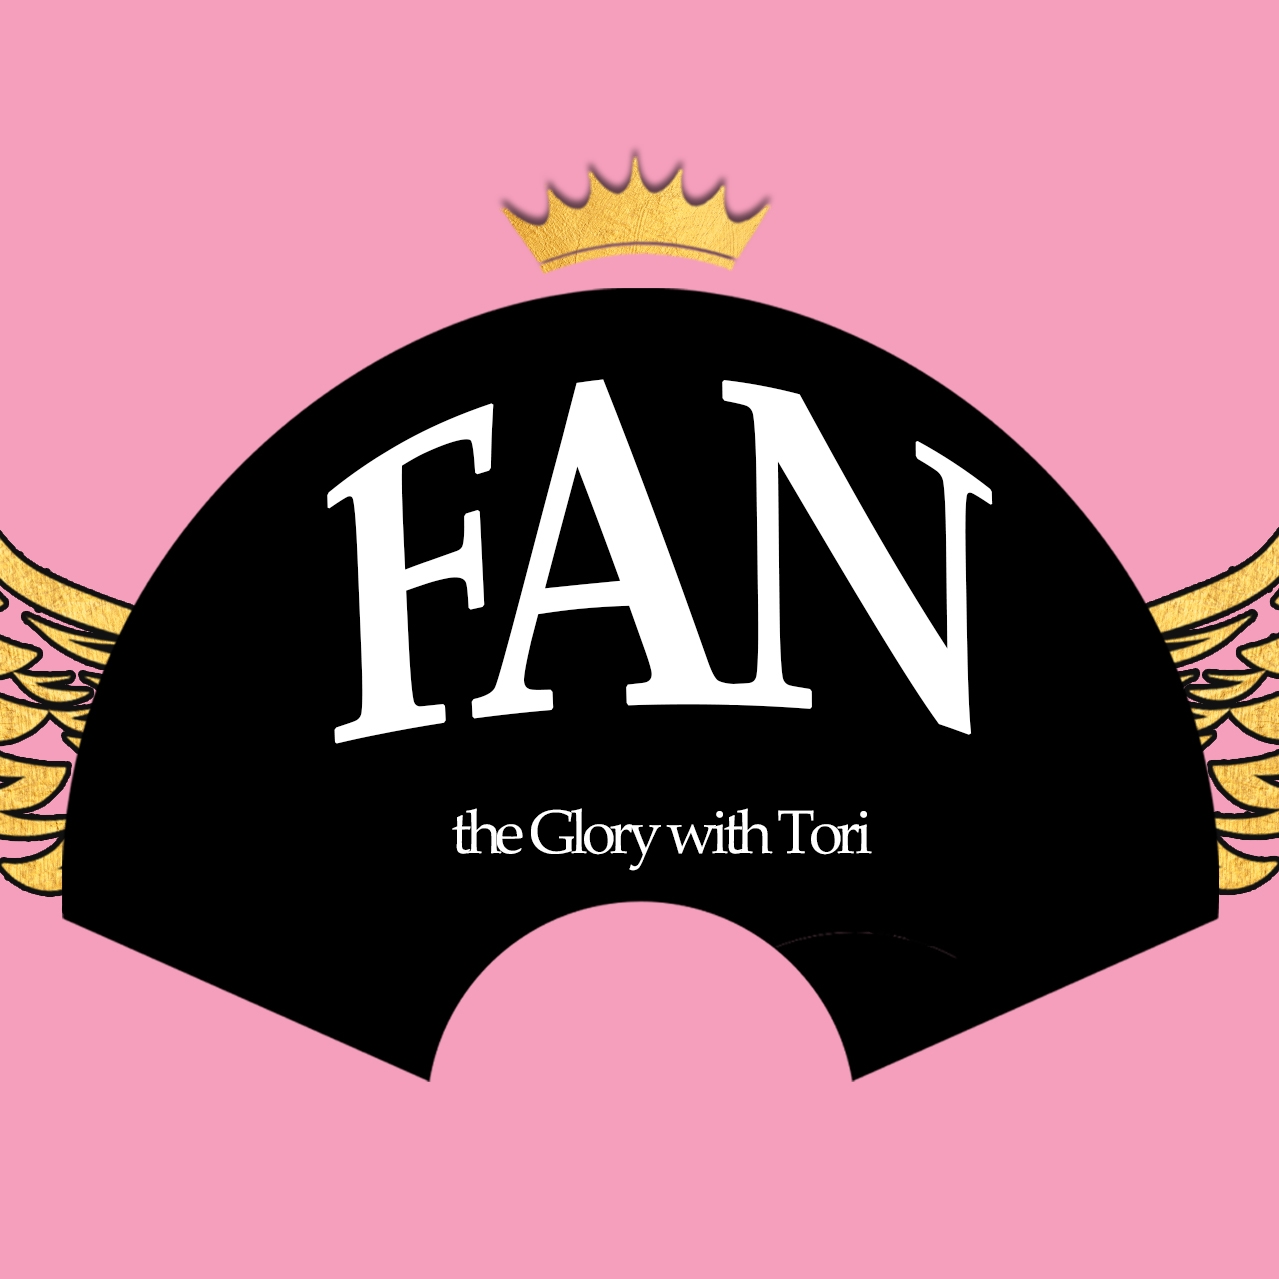 Fan the Glory with Tori logo